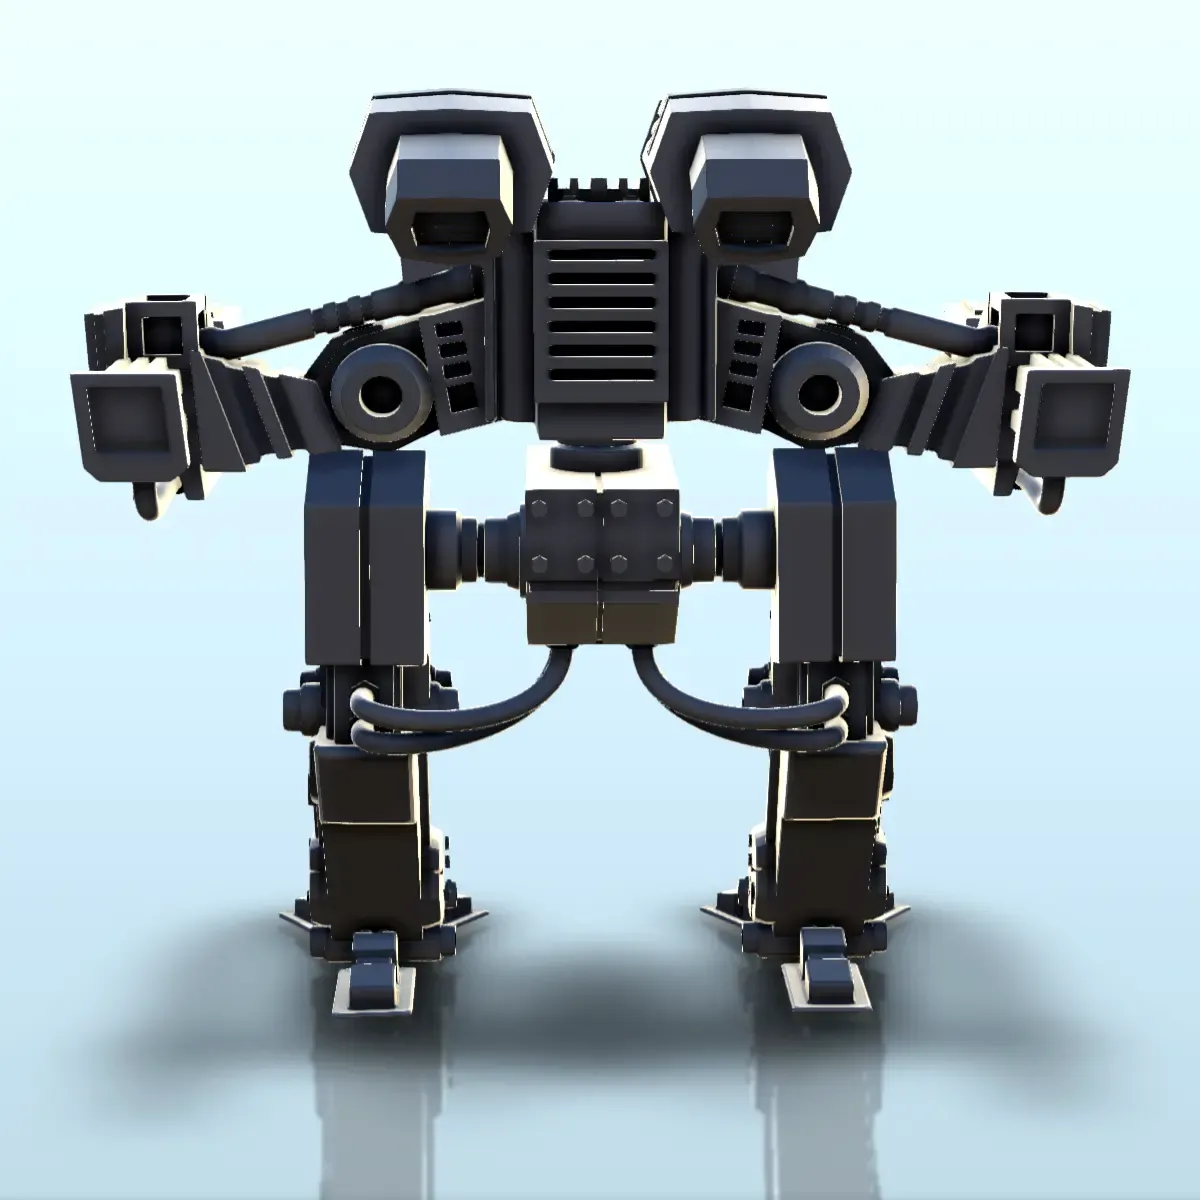 Uzsus combat robot (9) - sci-fi science fiction future 40k b